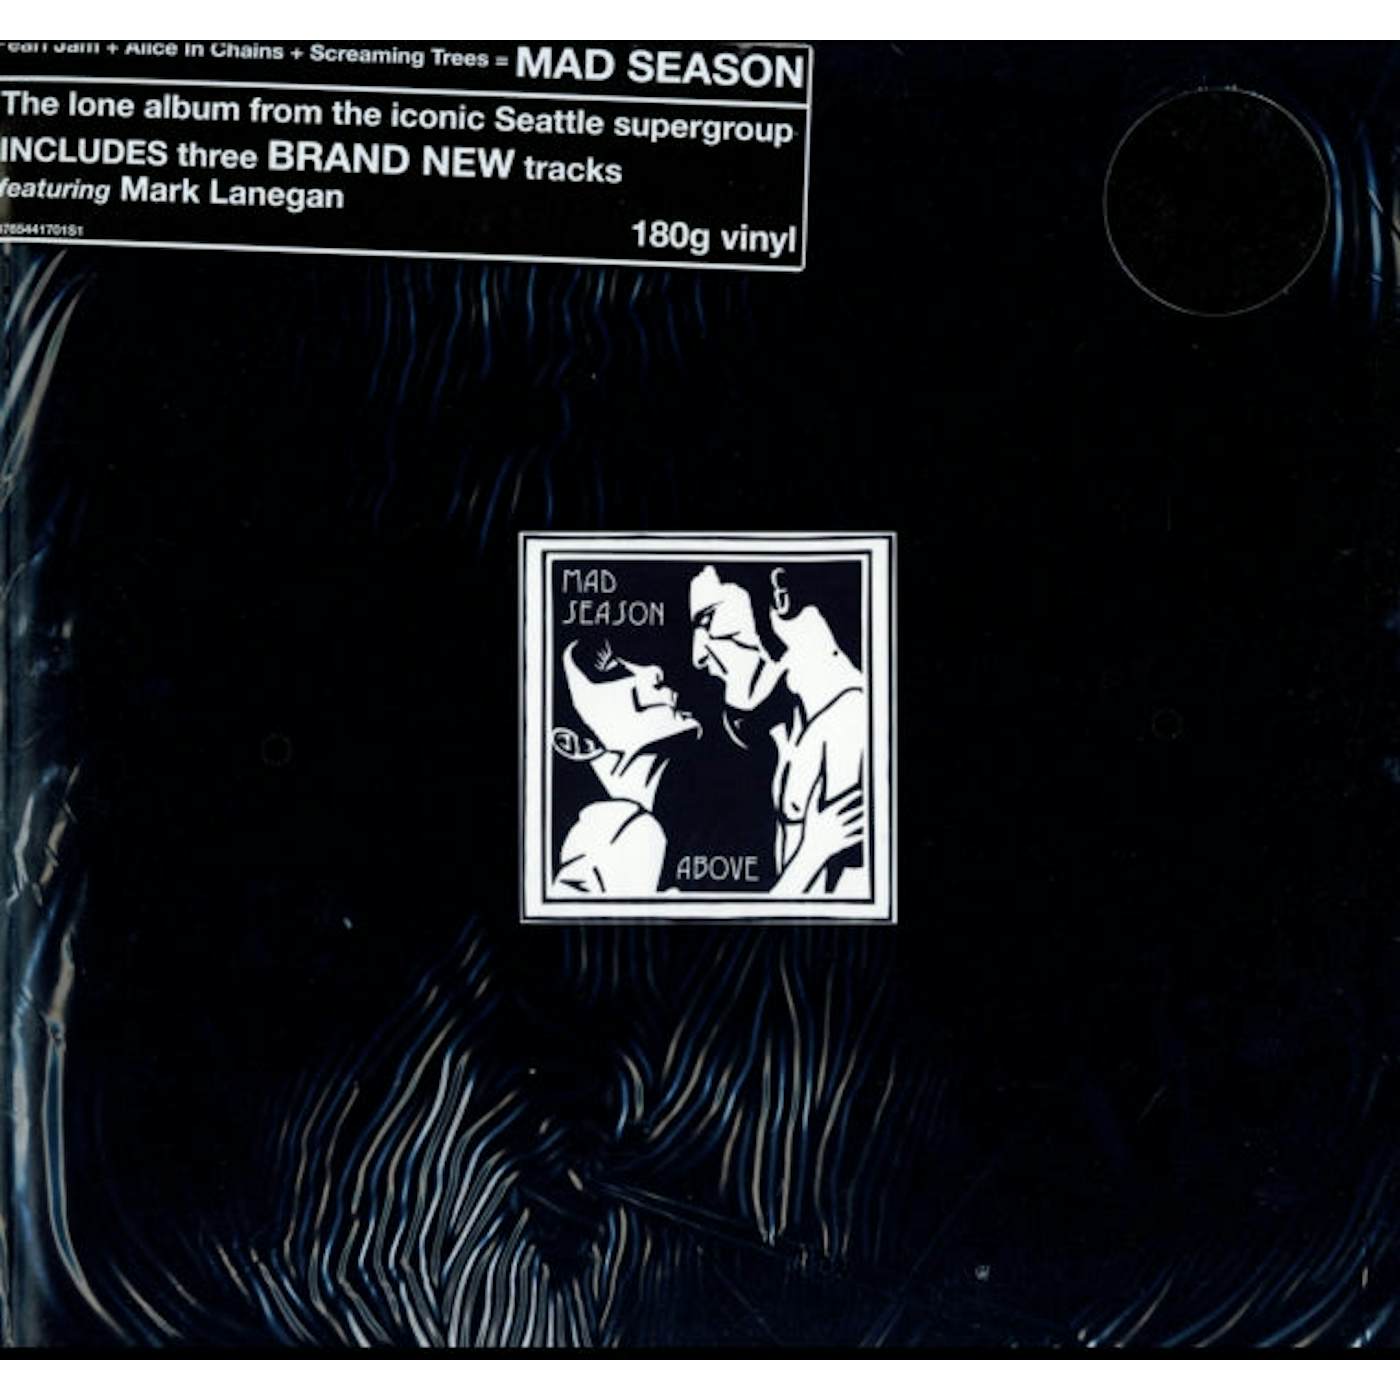 Mad Season LP Vinyl Record - Above (2Lp / 180G / Expanded Edition / Gatefold)